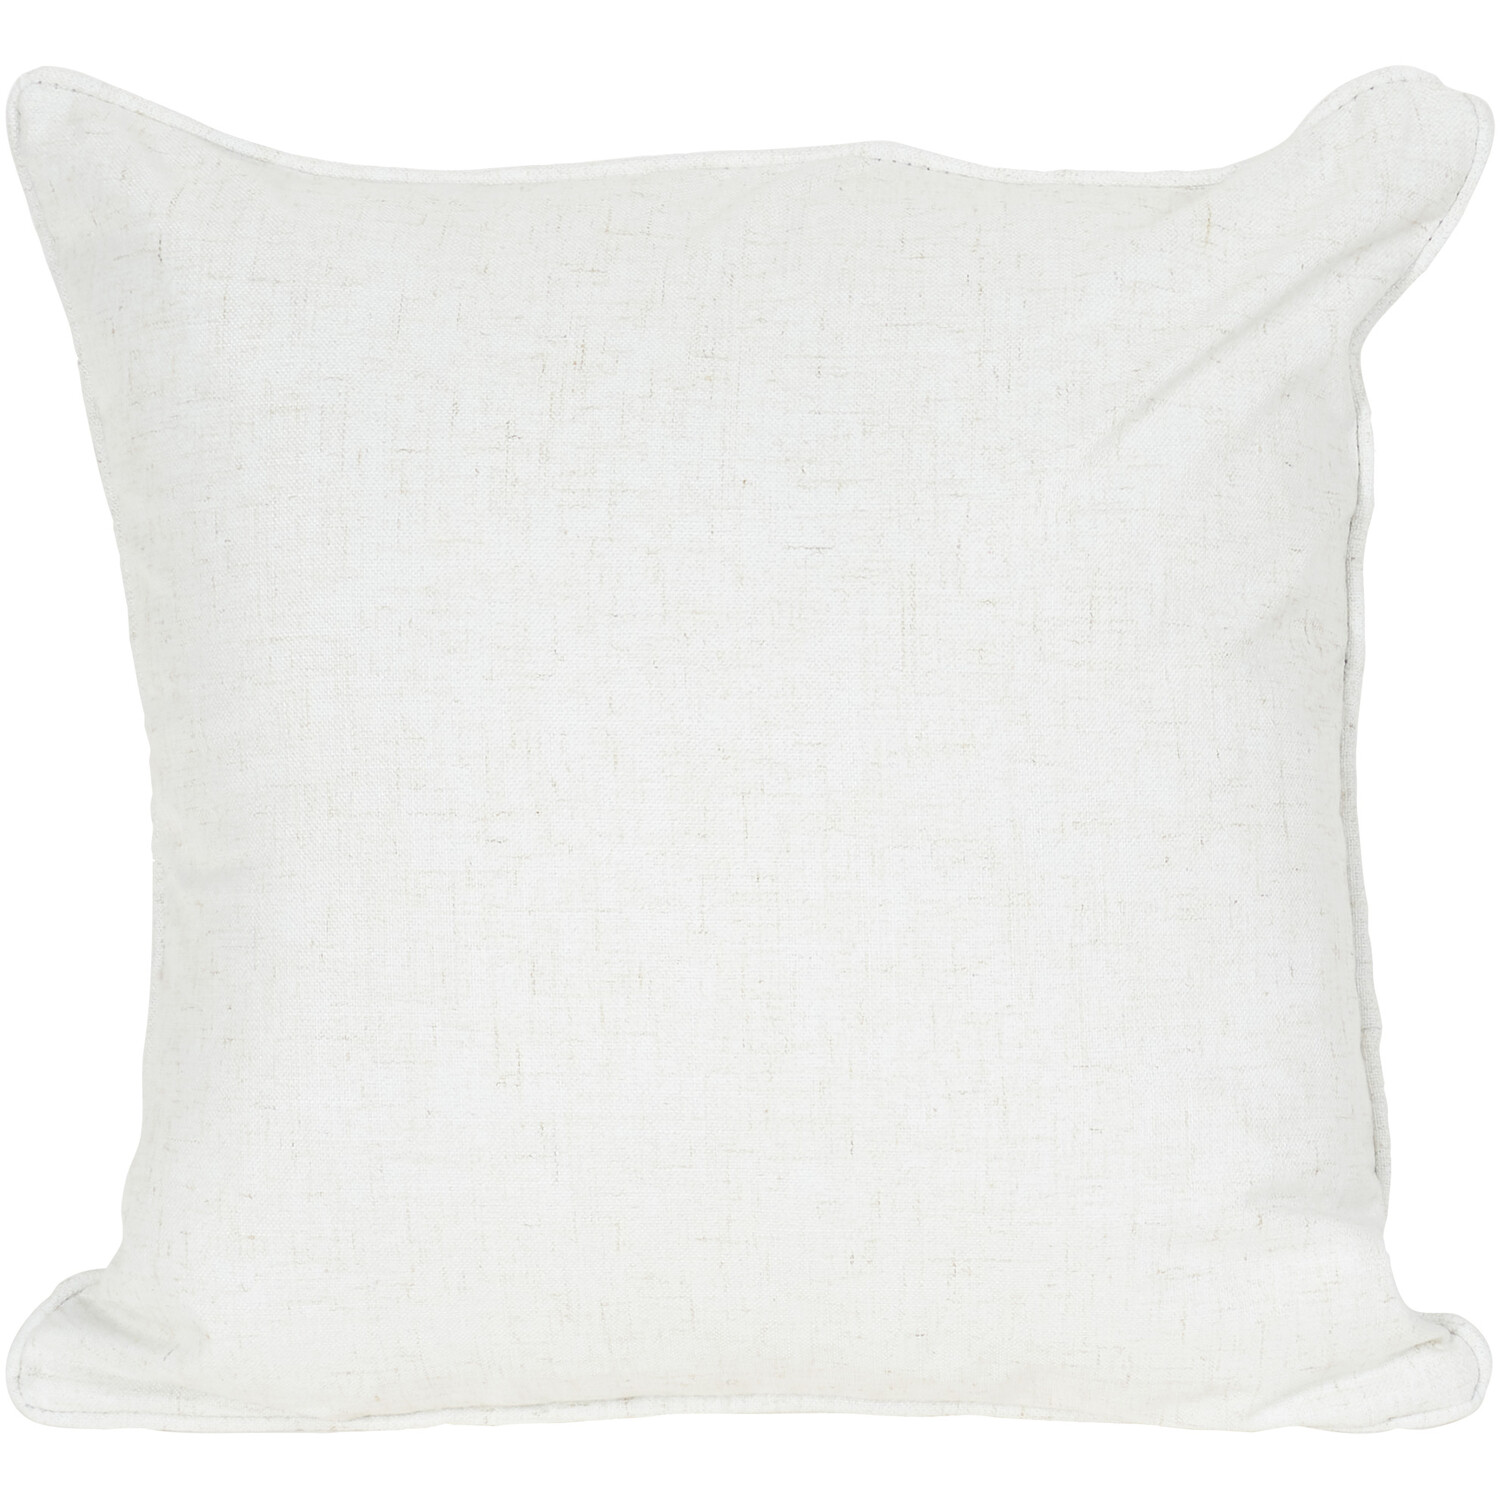 Verona Linen Look Cushion - White Image 1